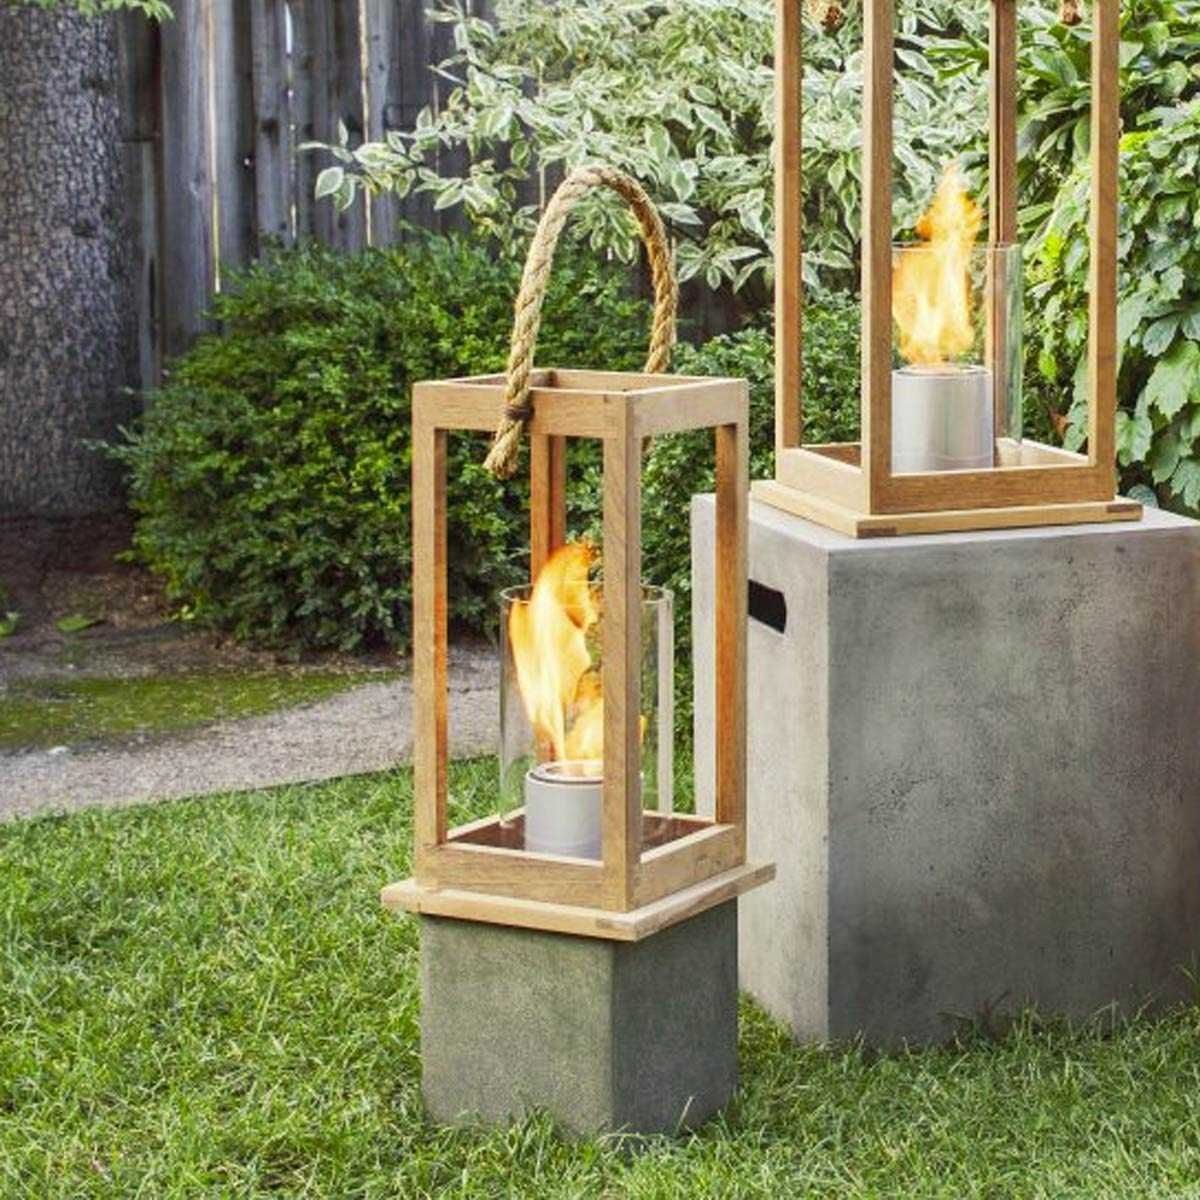 Brisbane 17" Gel Fuel Series Lantern In Teak Wood With Regard To Outdoor Gel Lanterns (View 5 of 20)